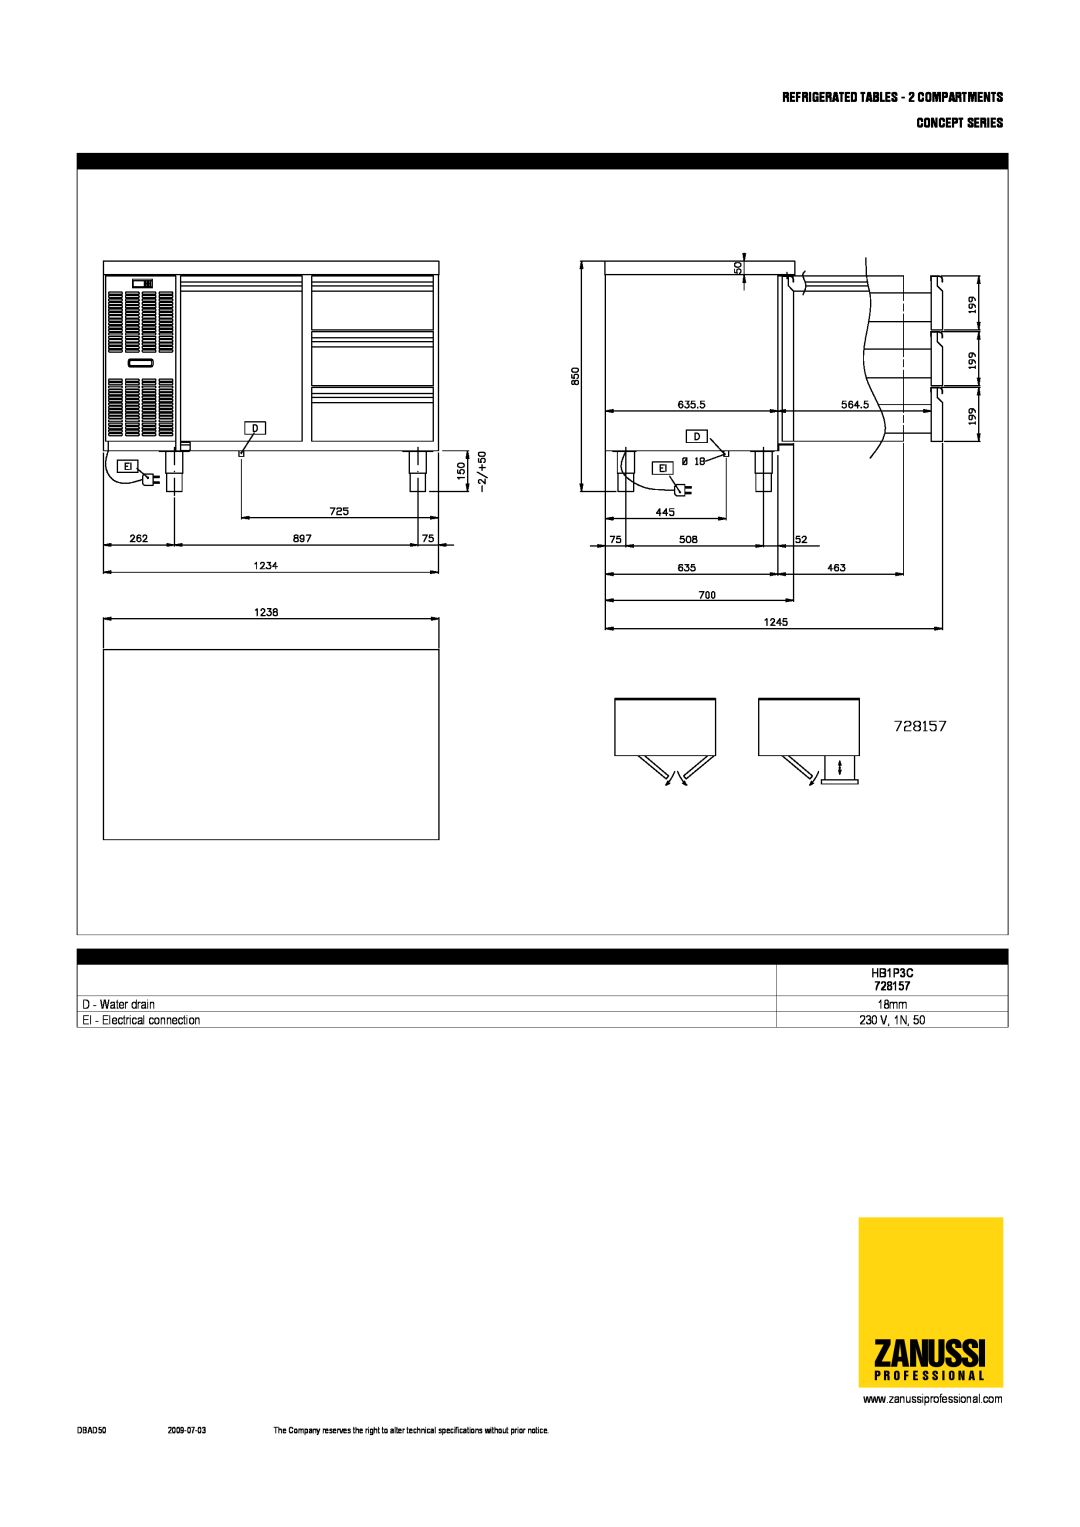 Zanussi HB2P Zanussi, REFRIGERATED TABLES - 2 COMPARTMENTS, Concept Series, HB1P3C, 728157, 18mm, P R O F E S S I O N A L 